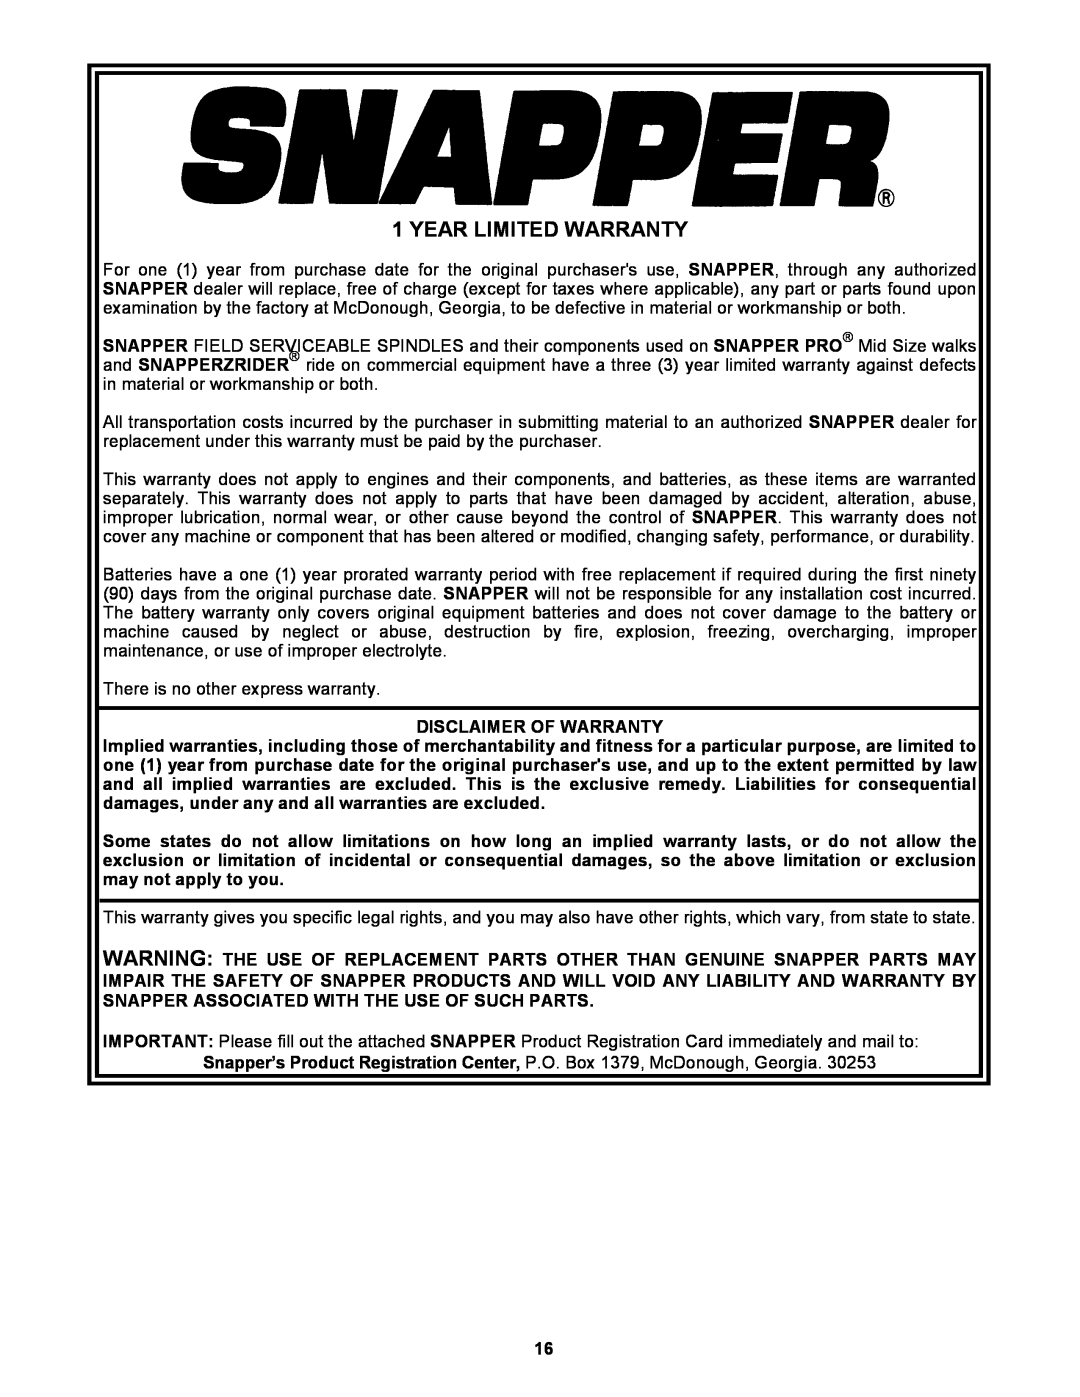 Snapper 6-3162, 7-3571 manual Year Limited Warranty 